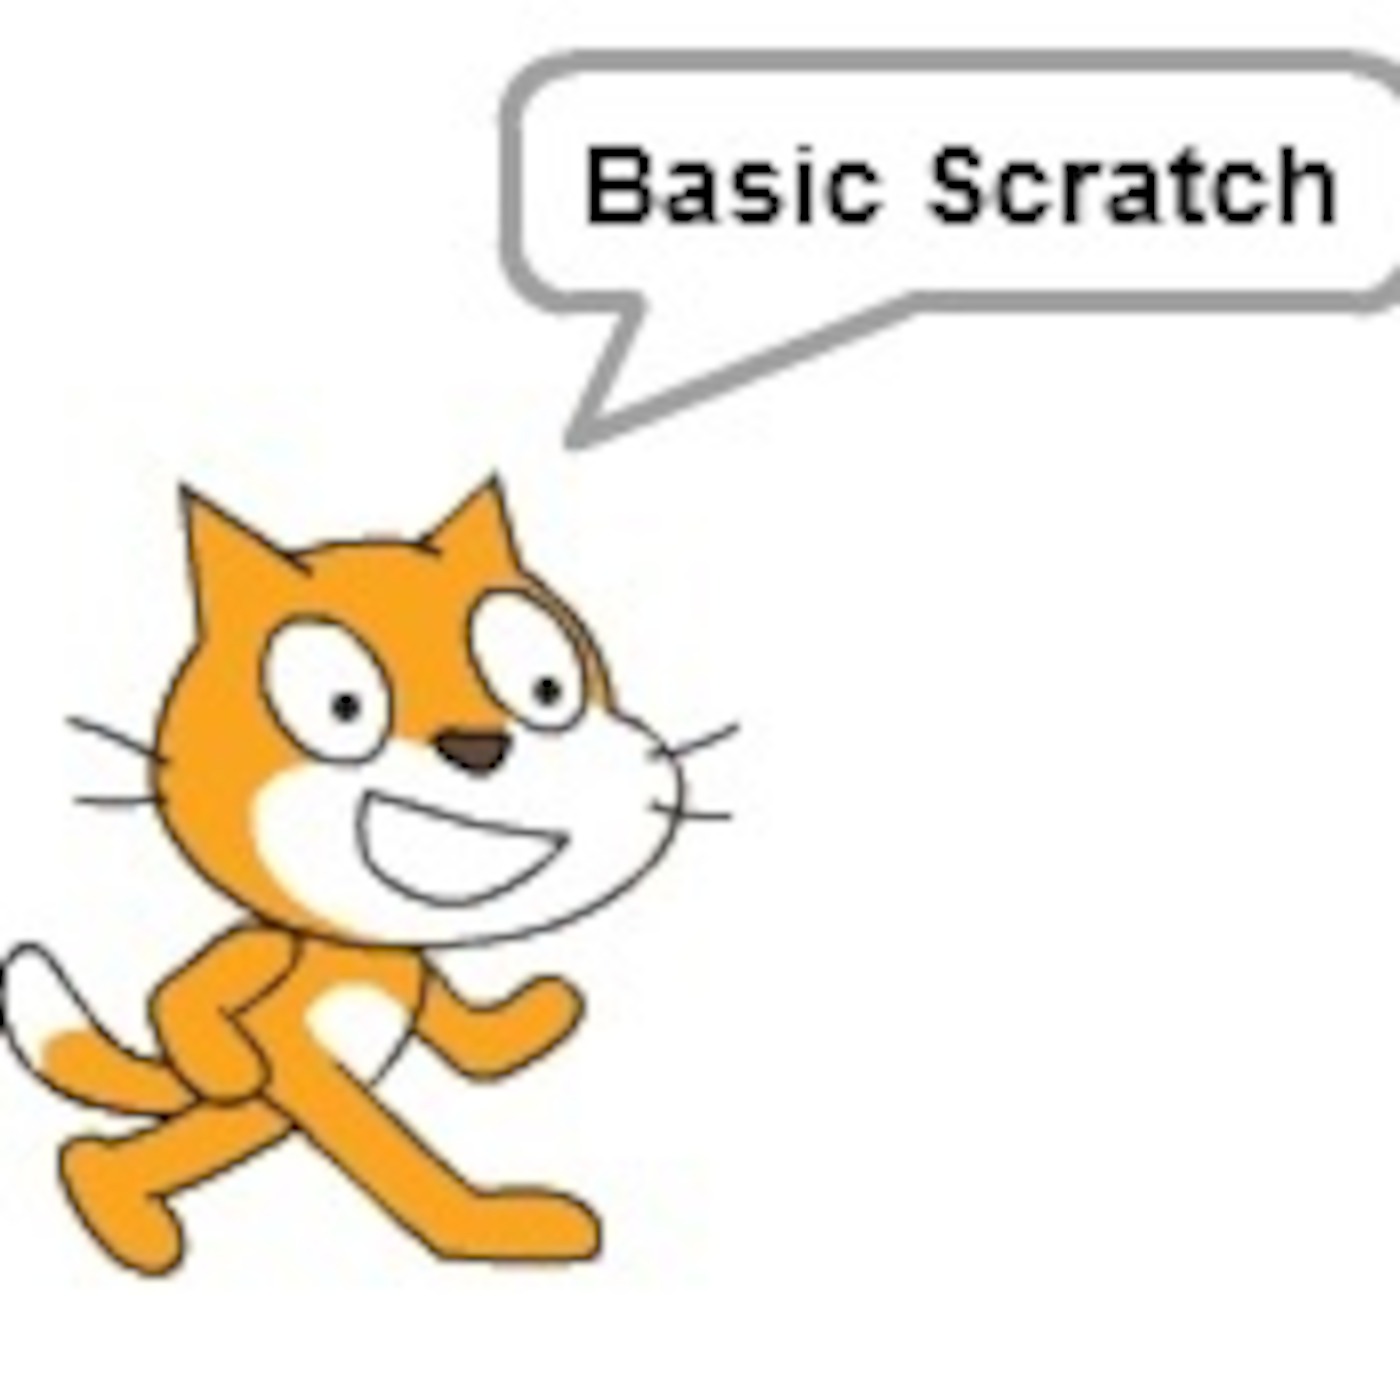 Basic Scratch Episode 12: Variables - Basic Scratch: An ...